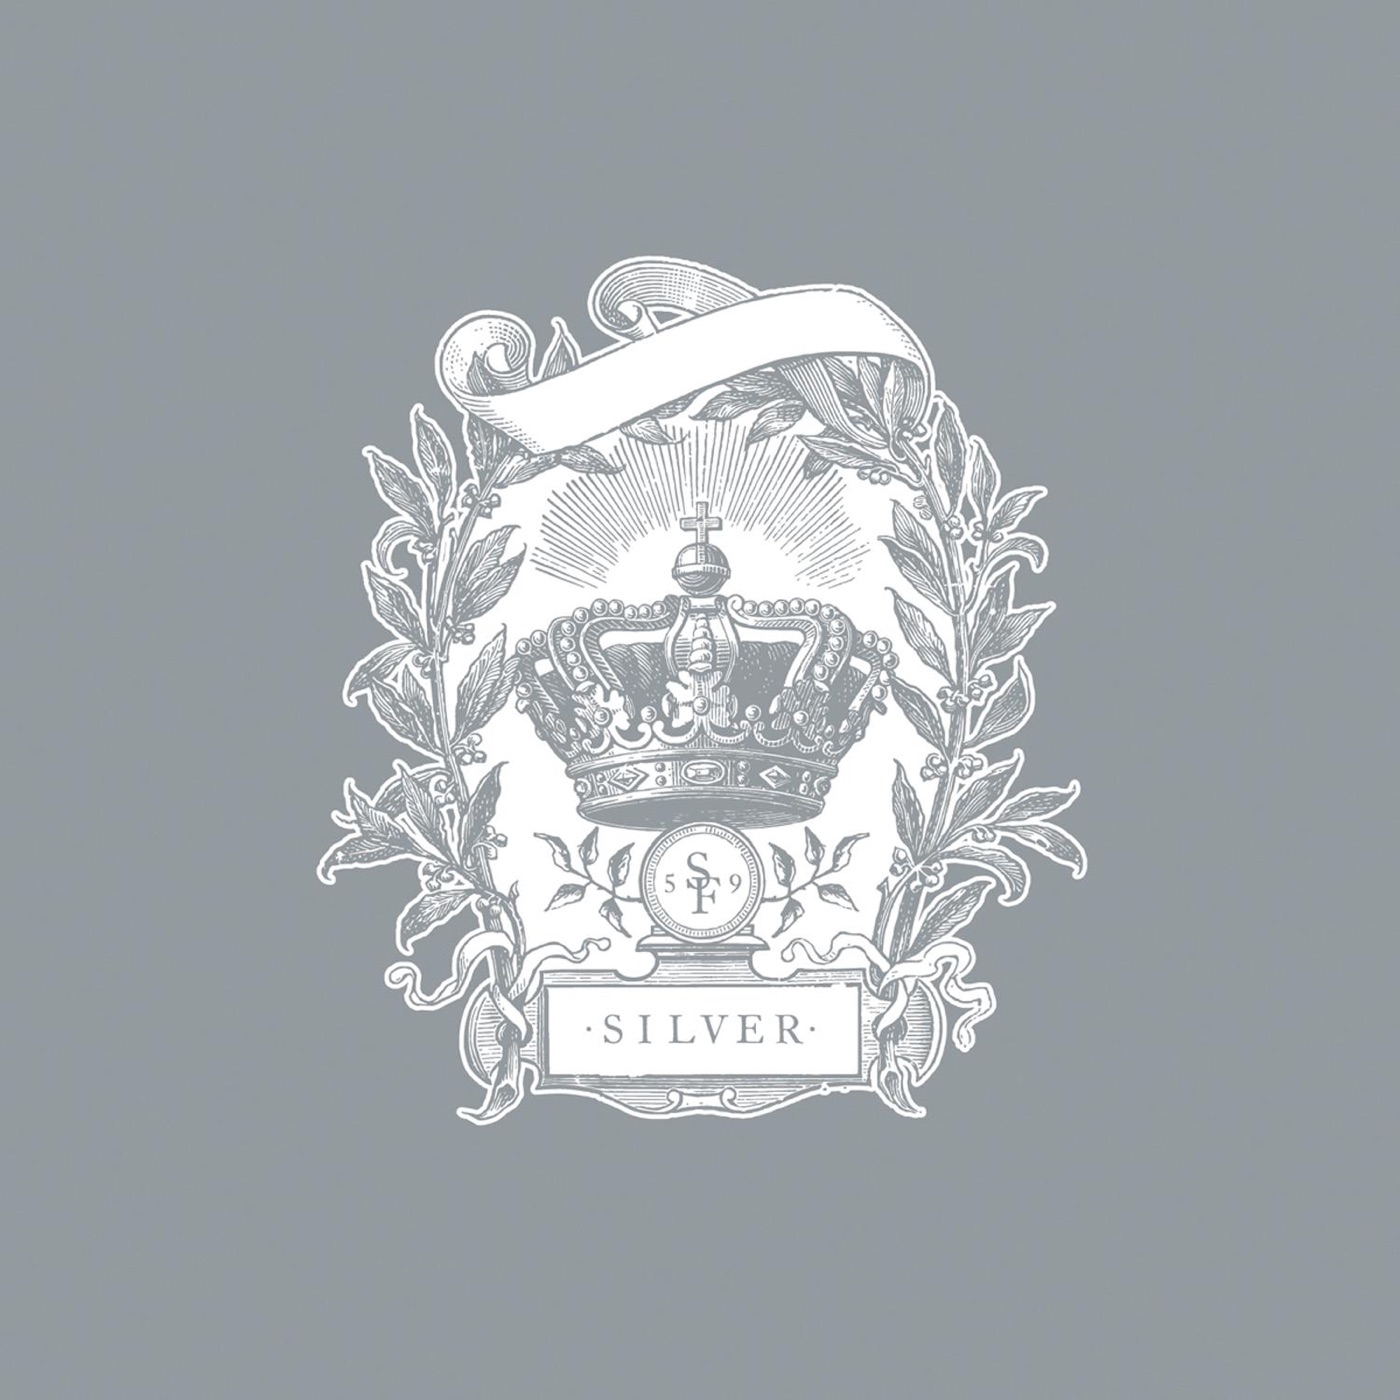 Silver by Starflyer 59